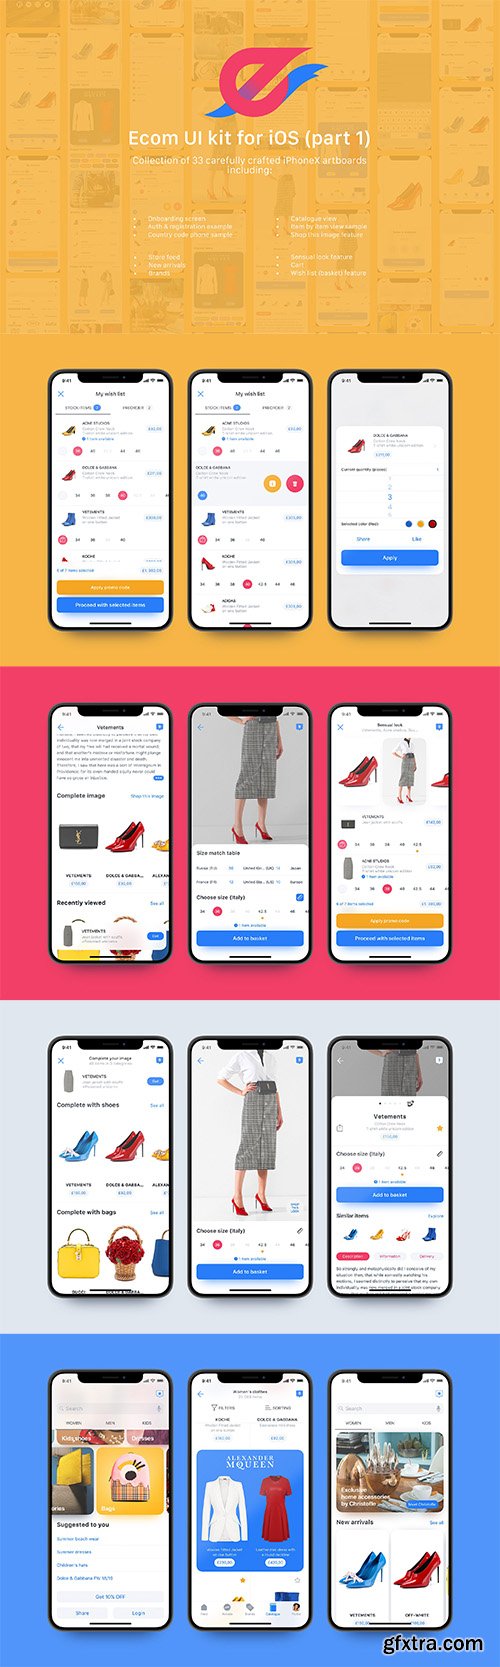 Luxury e-commerce iOS UI kit